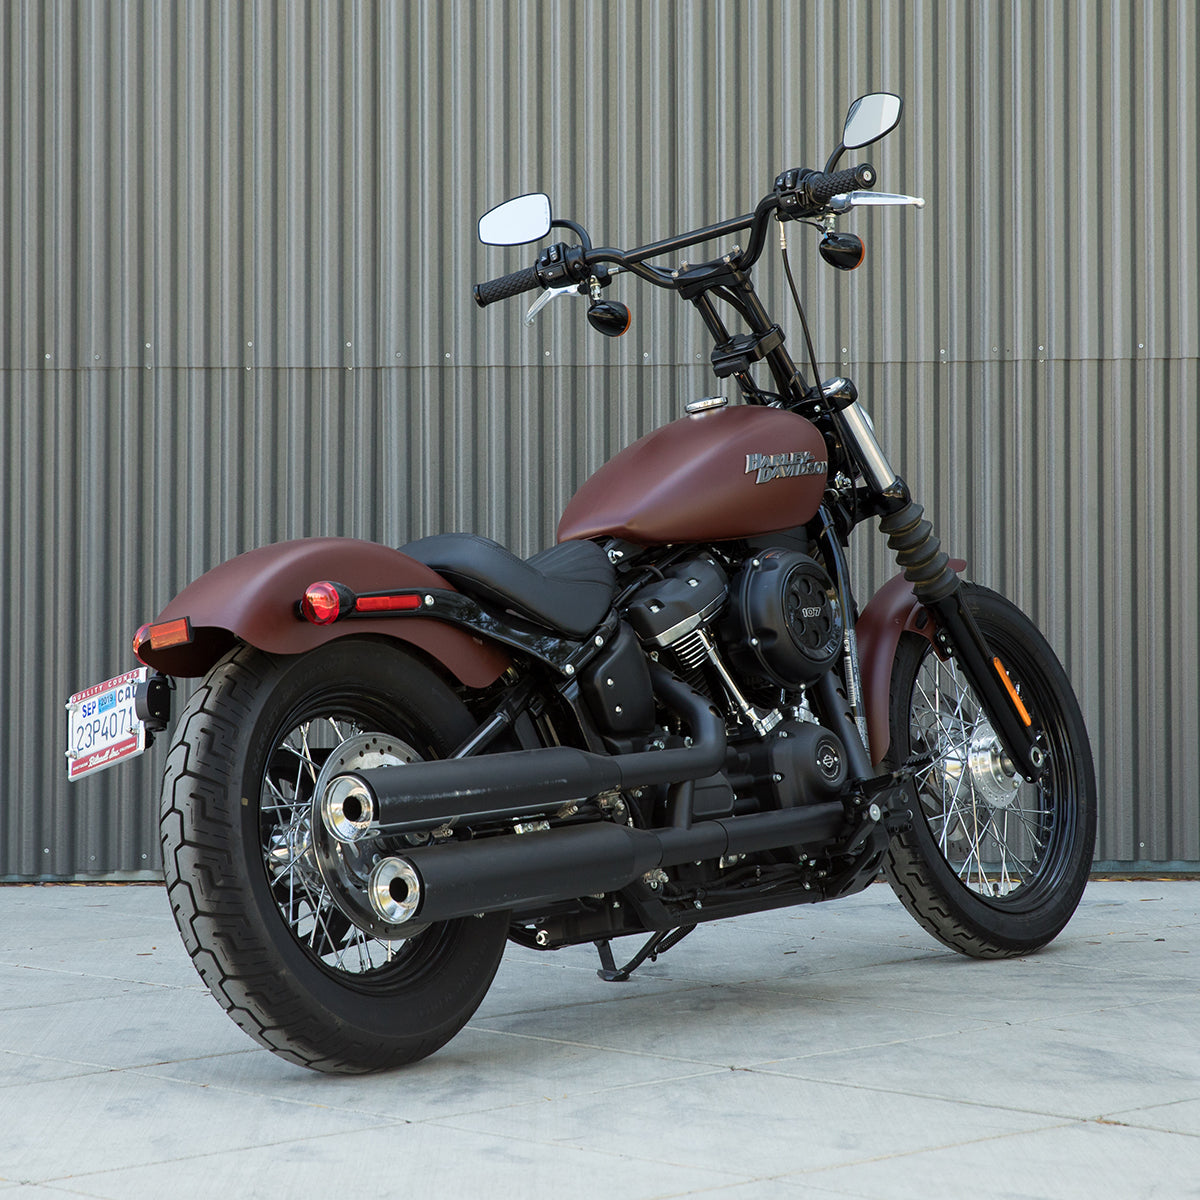 Shocks, Handlebars, Seats and Accessories for Harley Davidson